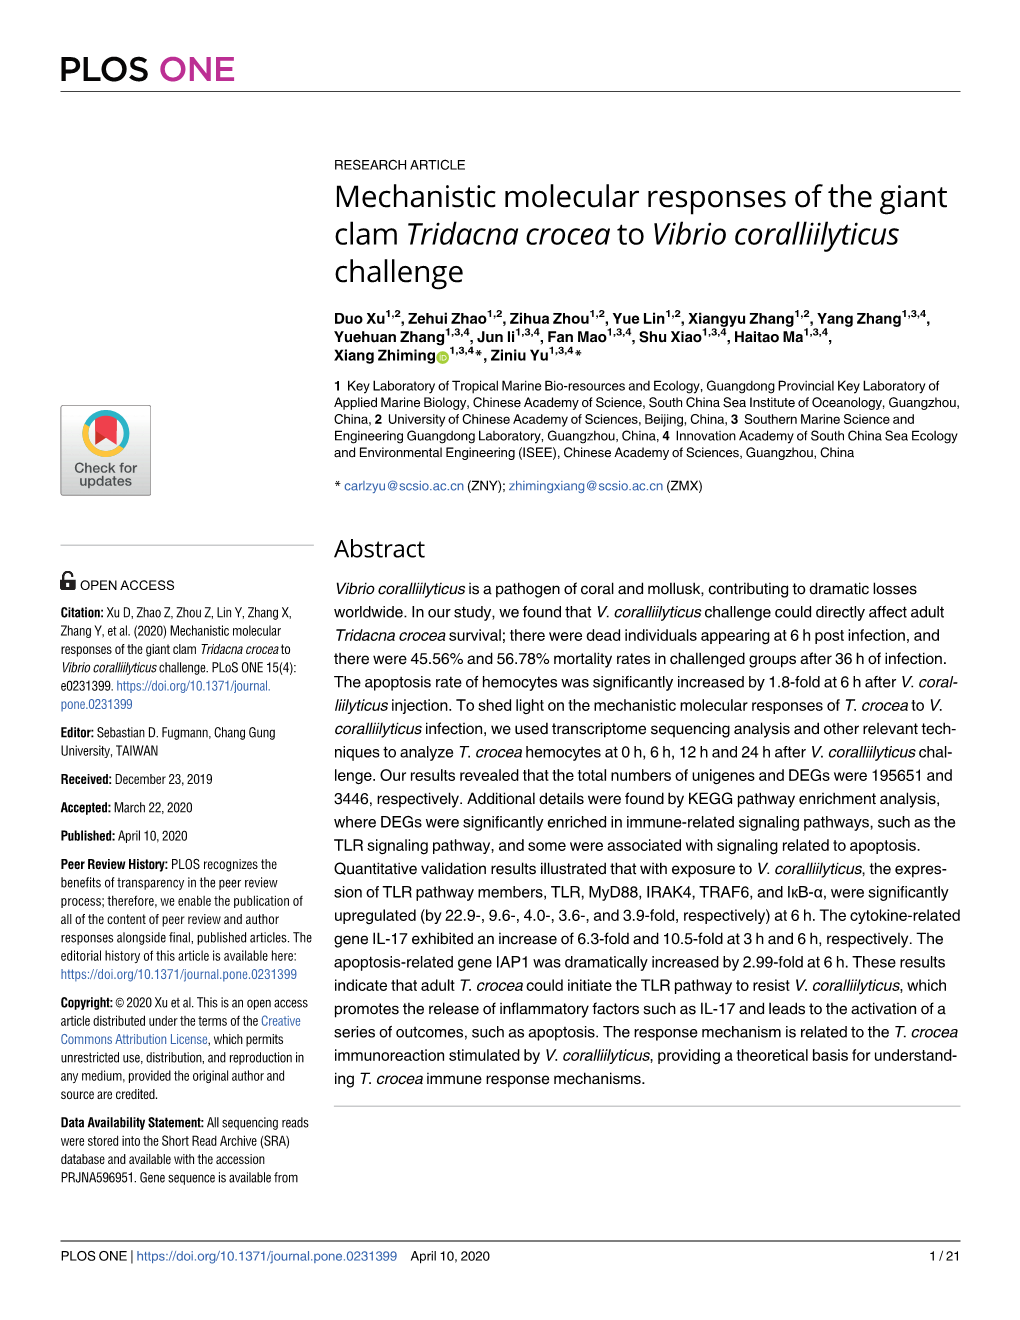 Mechanistic Molecular Responses of the Giant Clam Tridacna Crocea to Vibrio Coralliilyticus Challenge